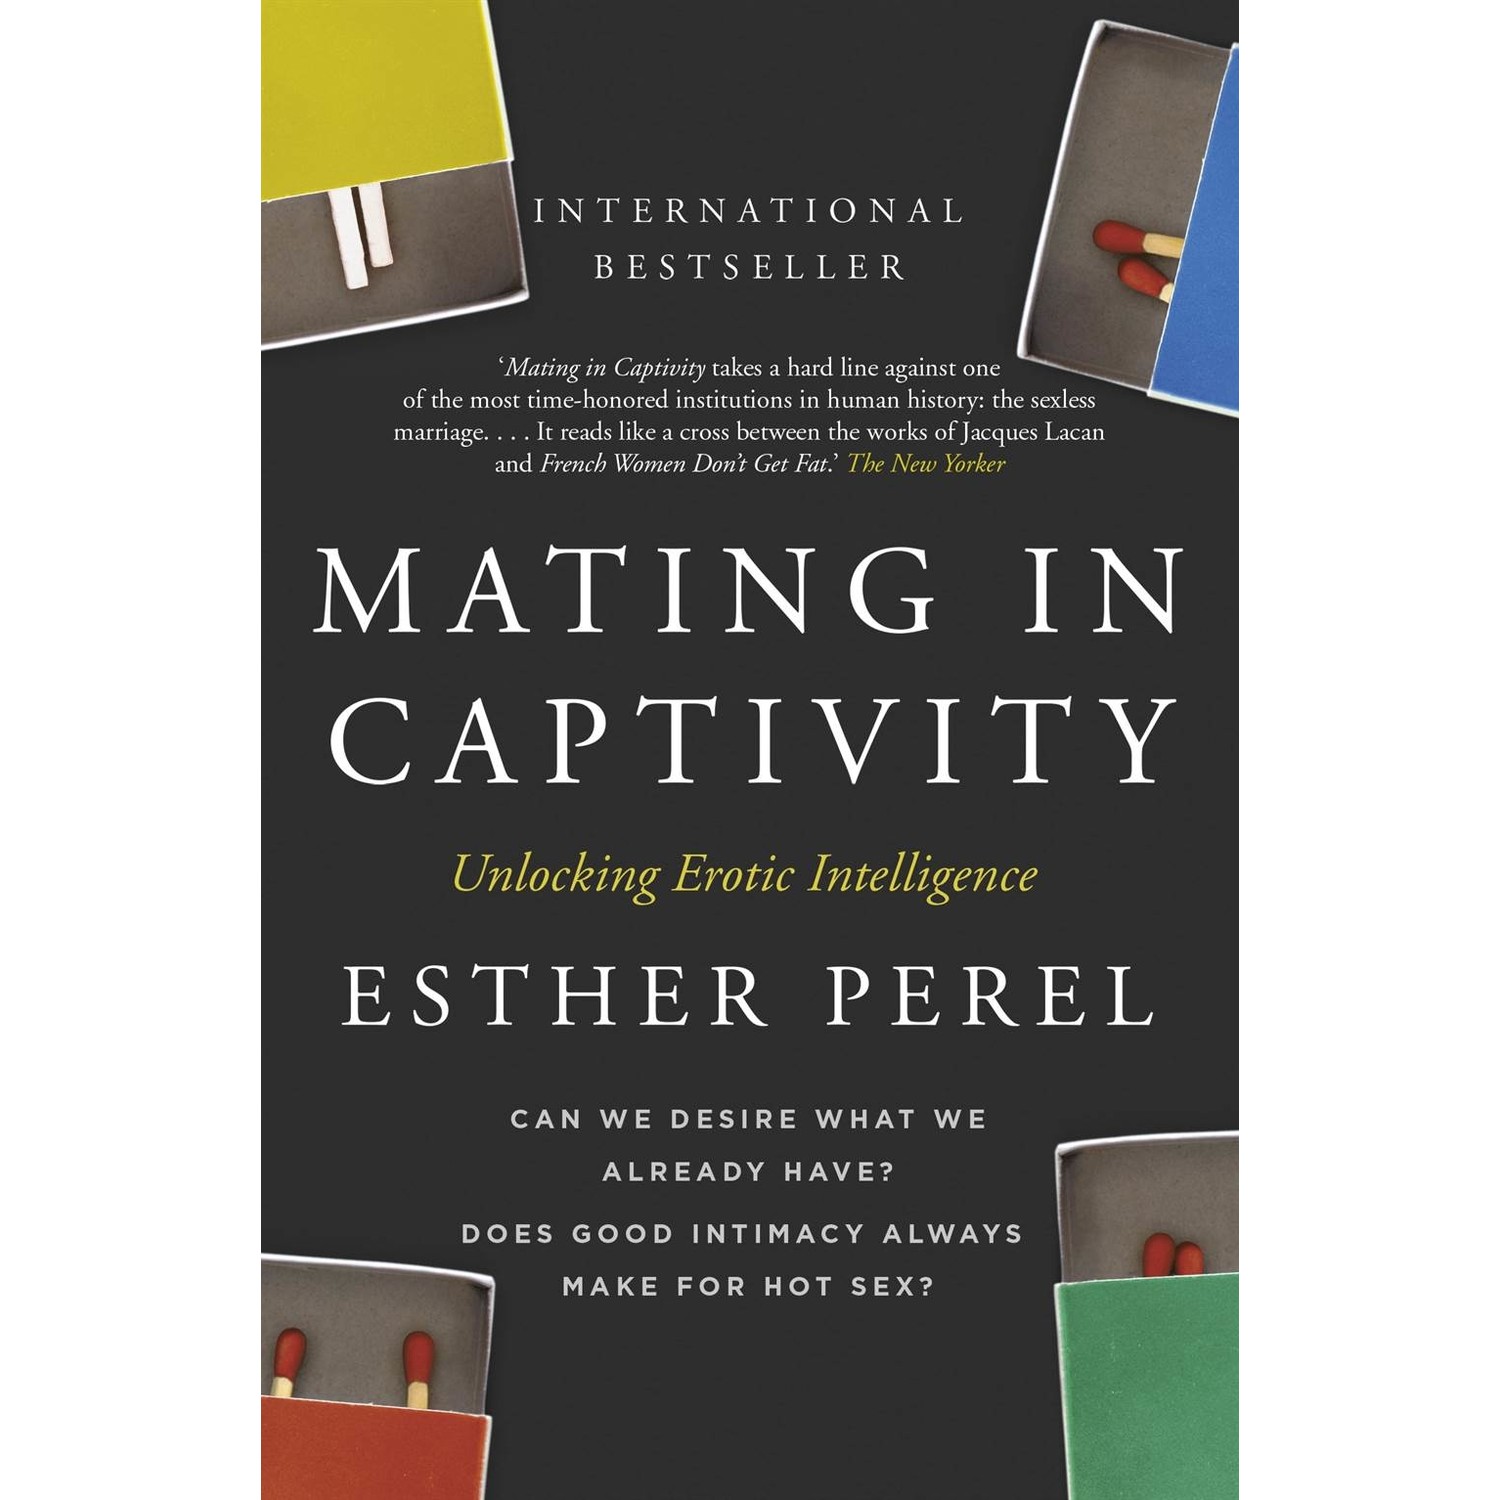 mating in captivity audio book